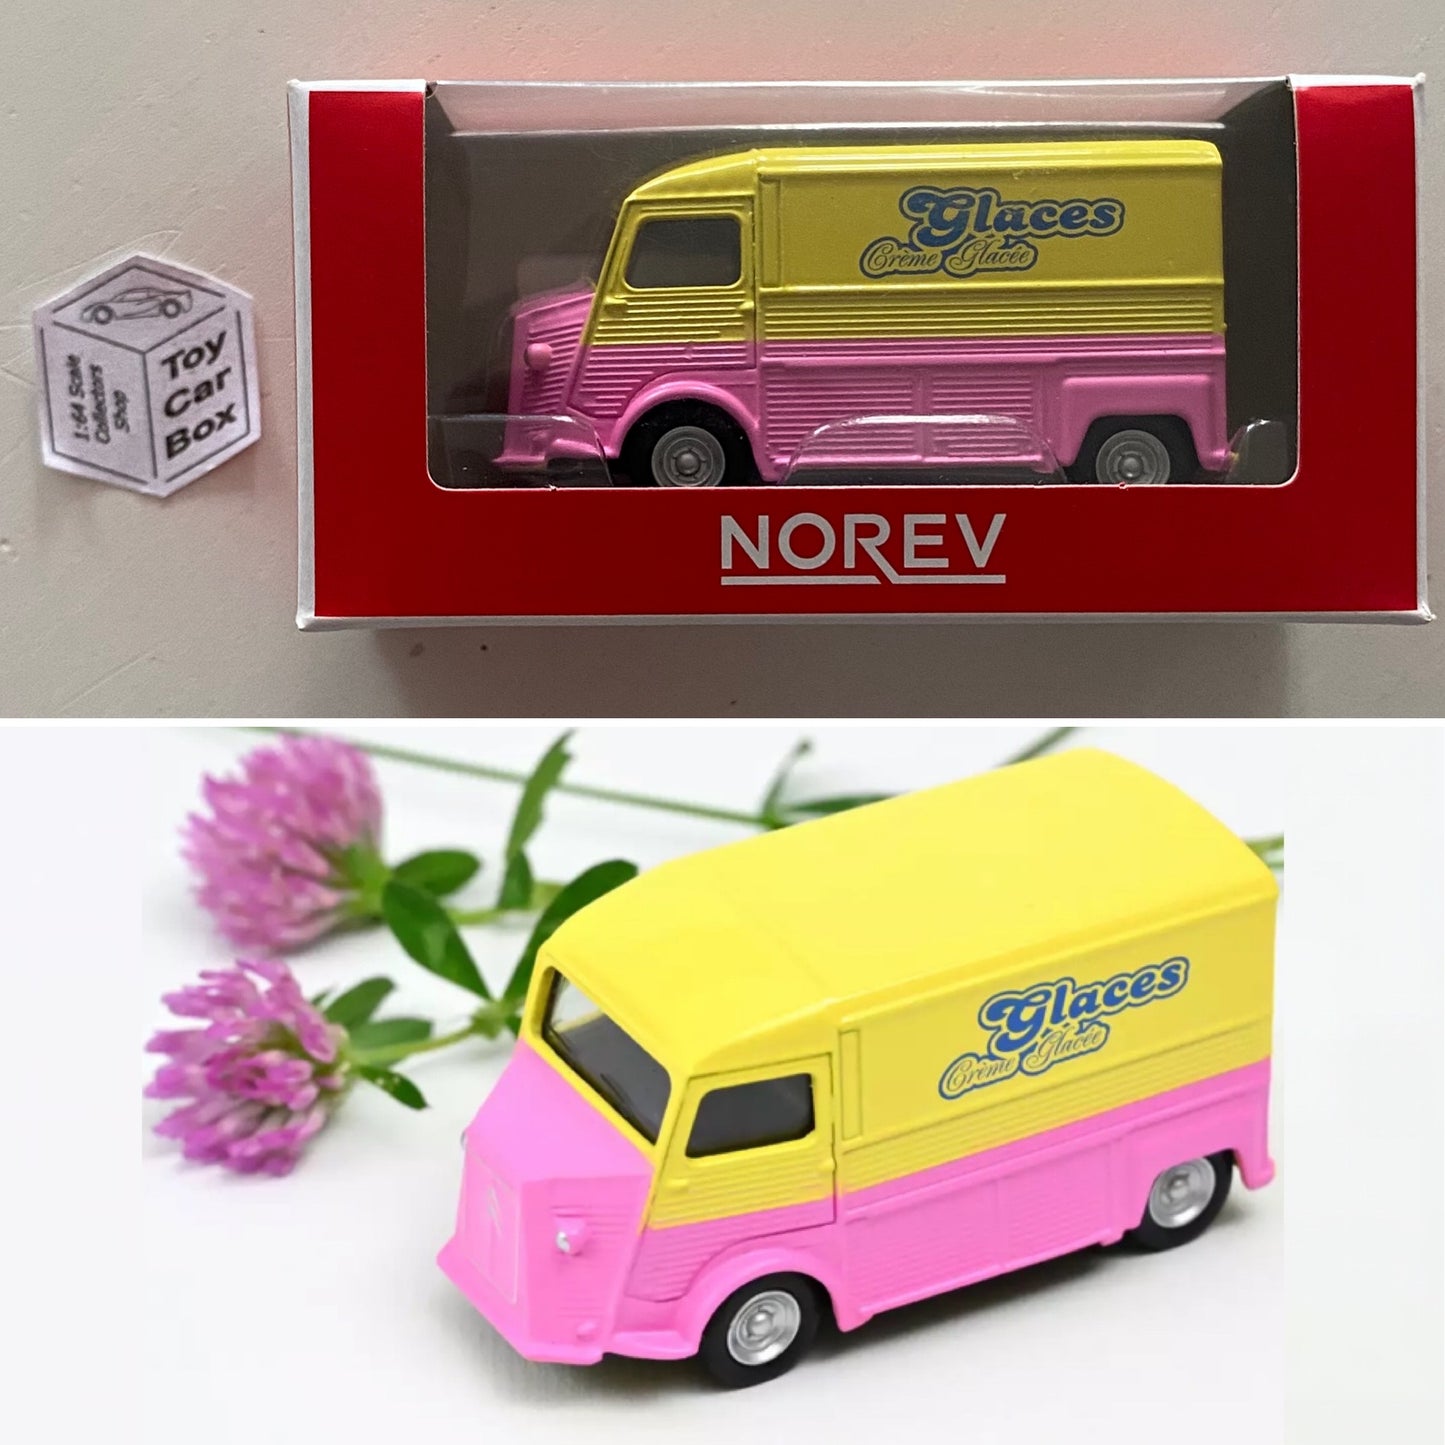 NOREV 1:64 Scale* - 1980 Citroen Type H (Glaces Creme Glace Ice Cream Van) G27g